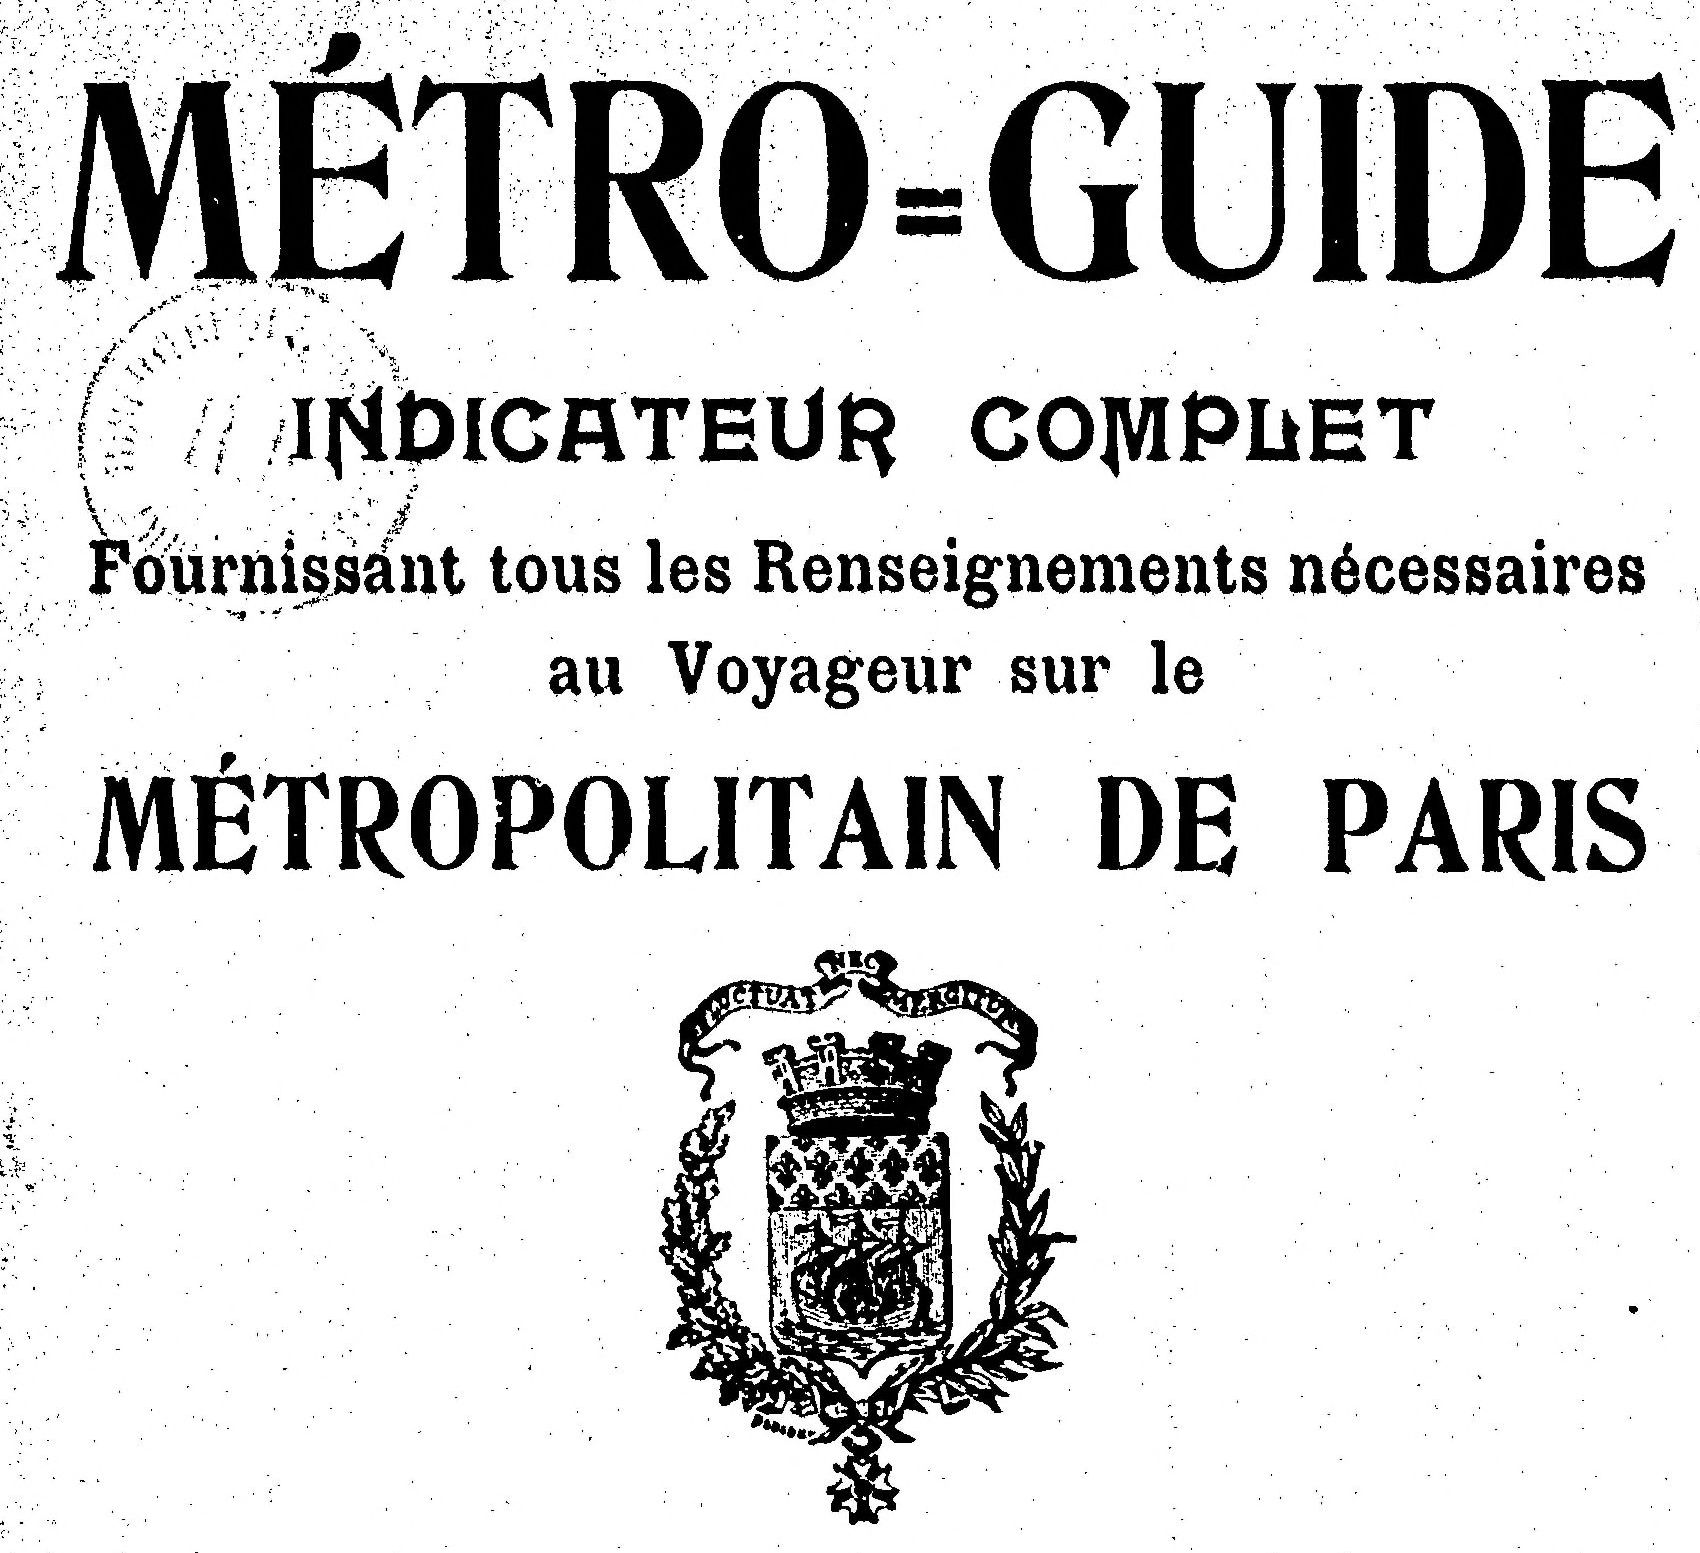 Métro-Guide, 1905